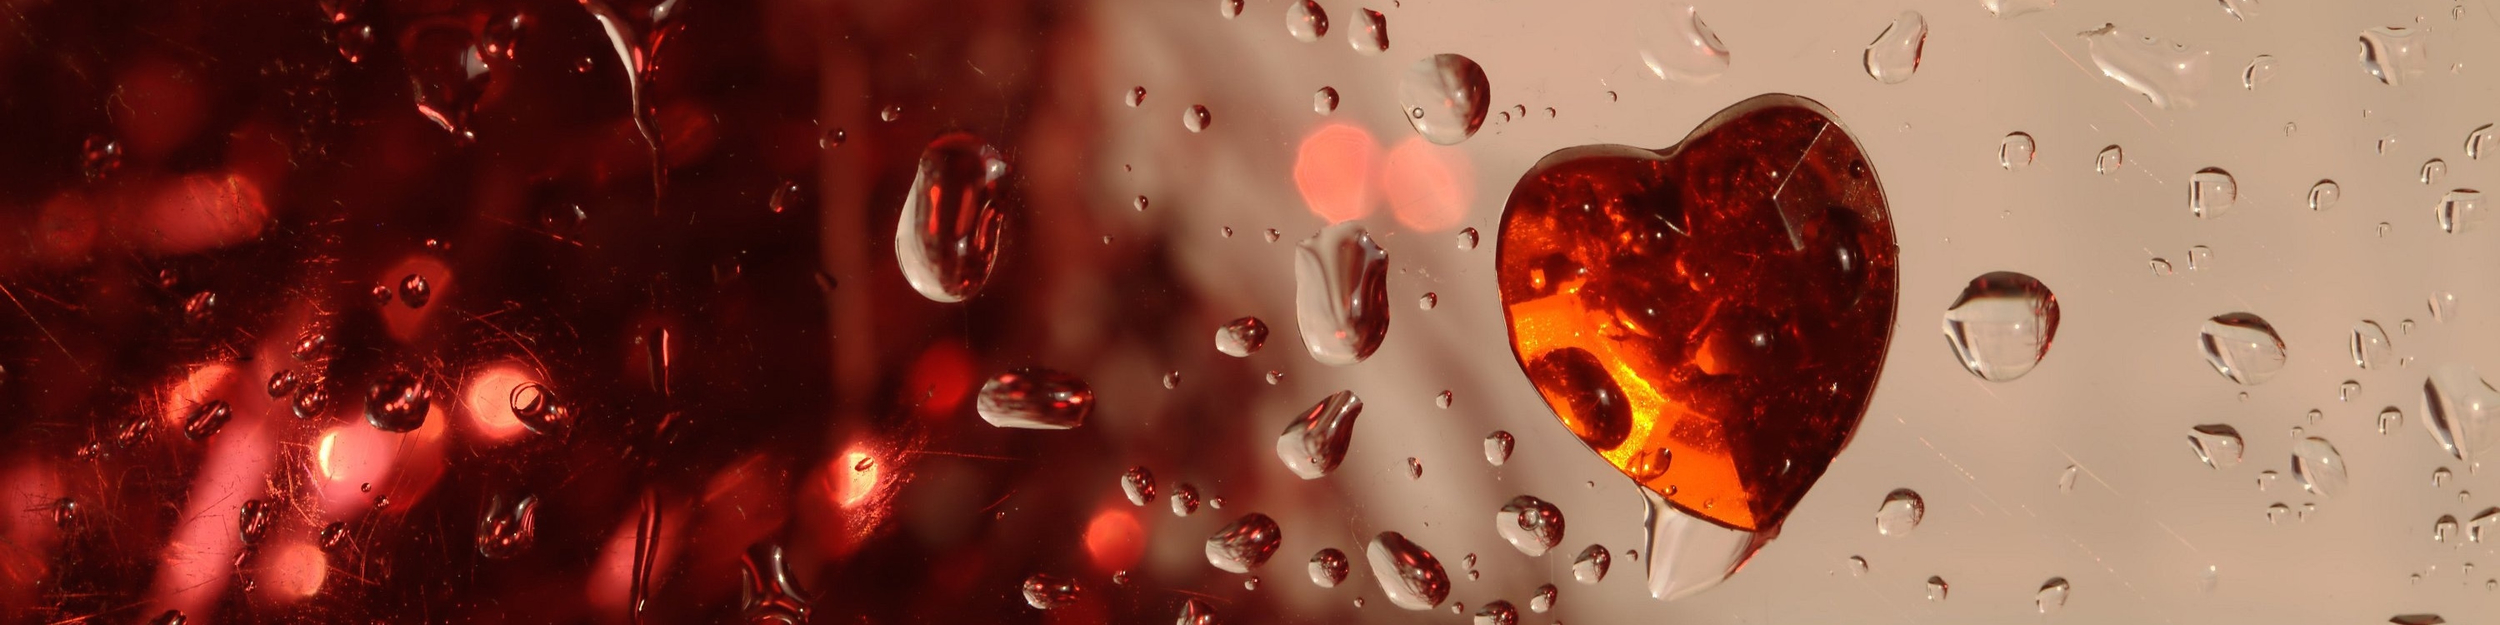 2015.01.09-Red-Heart-Drops-of-Water.jpg